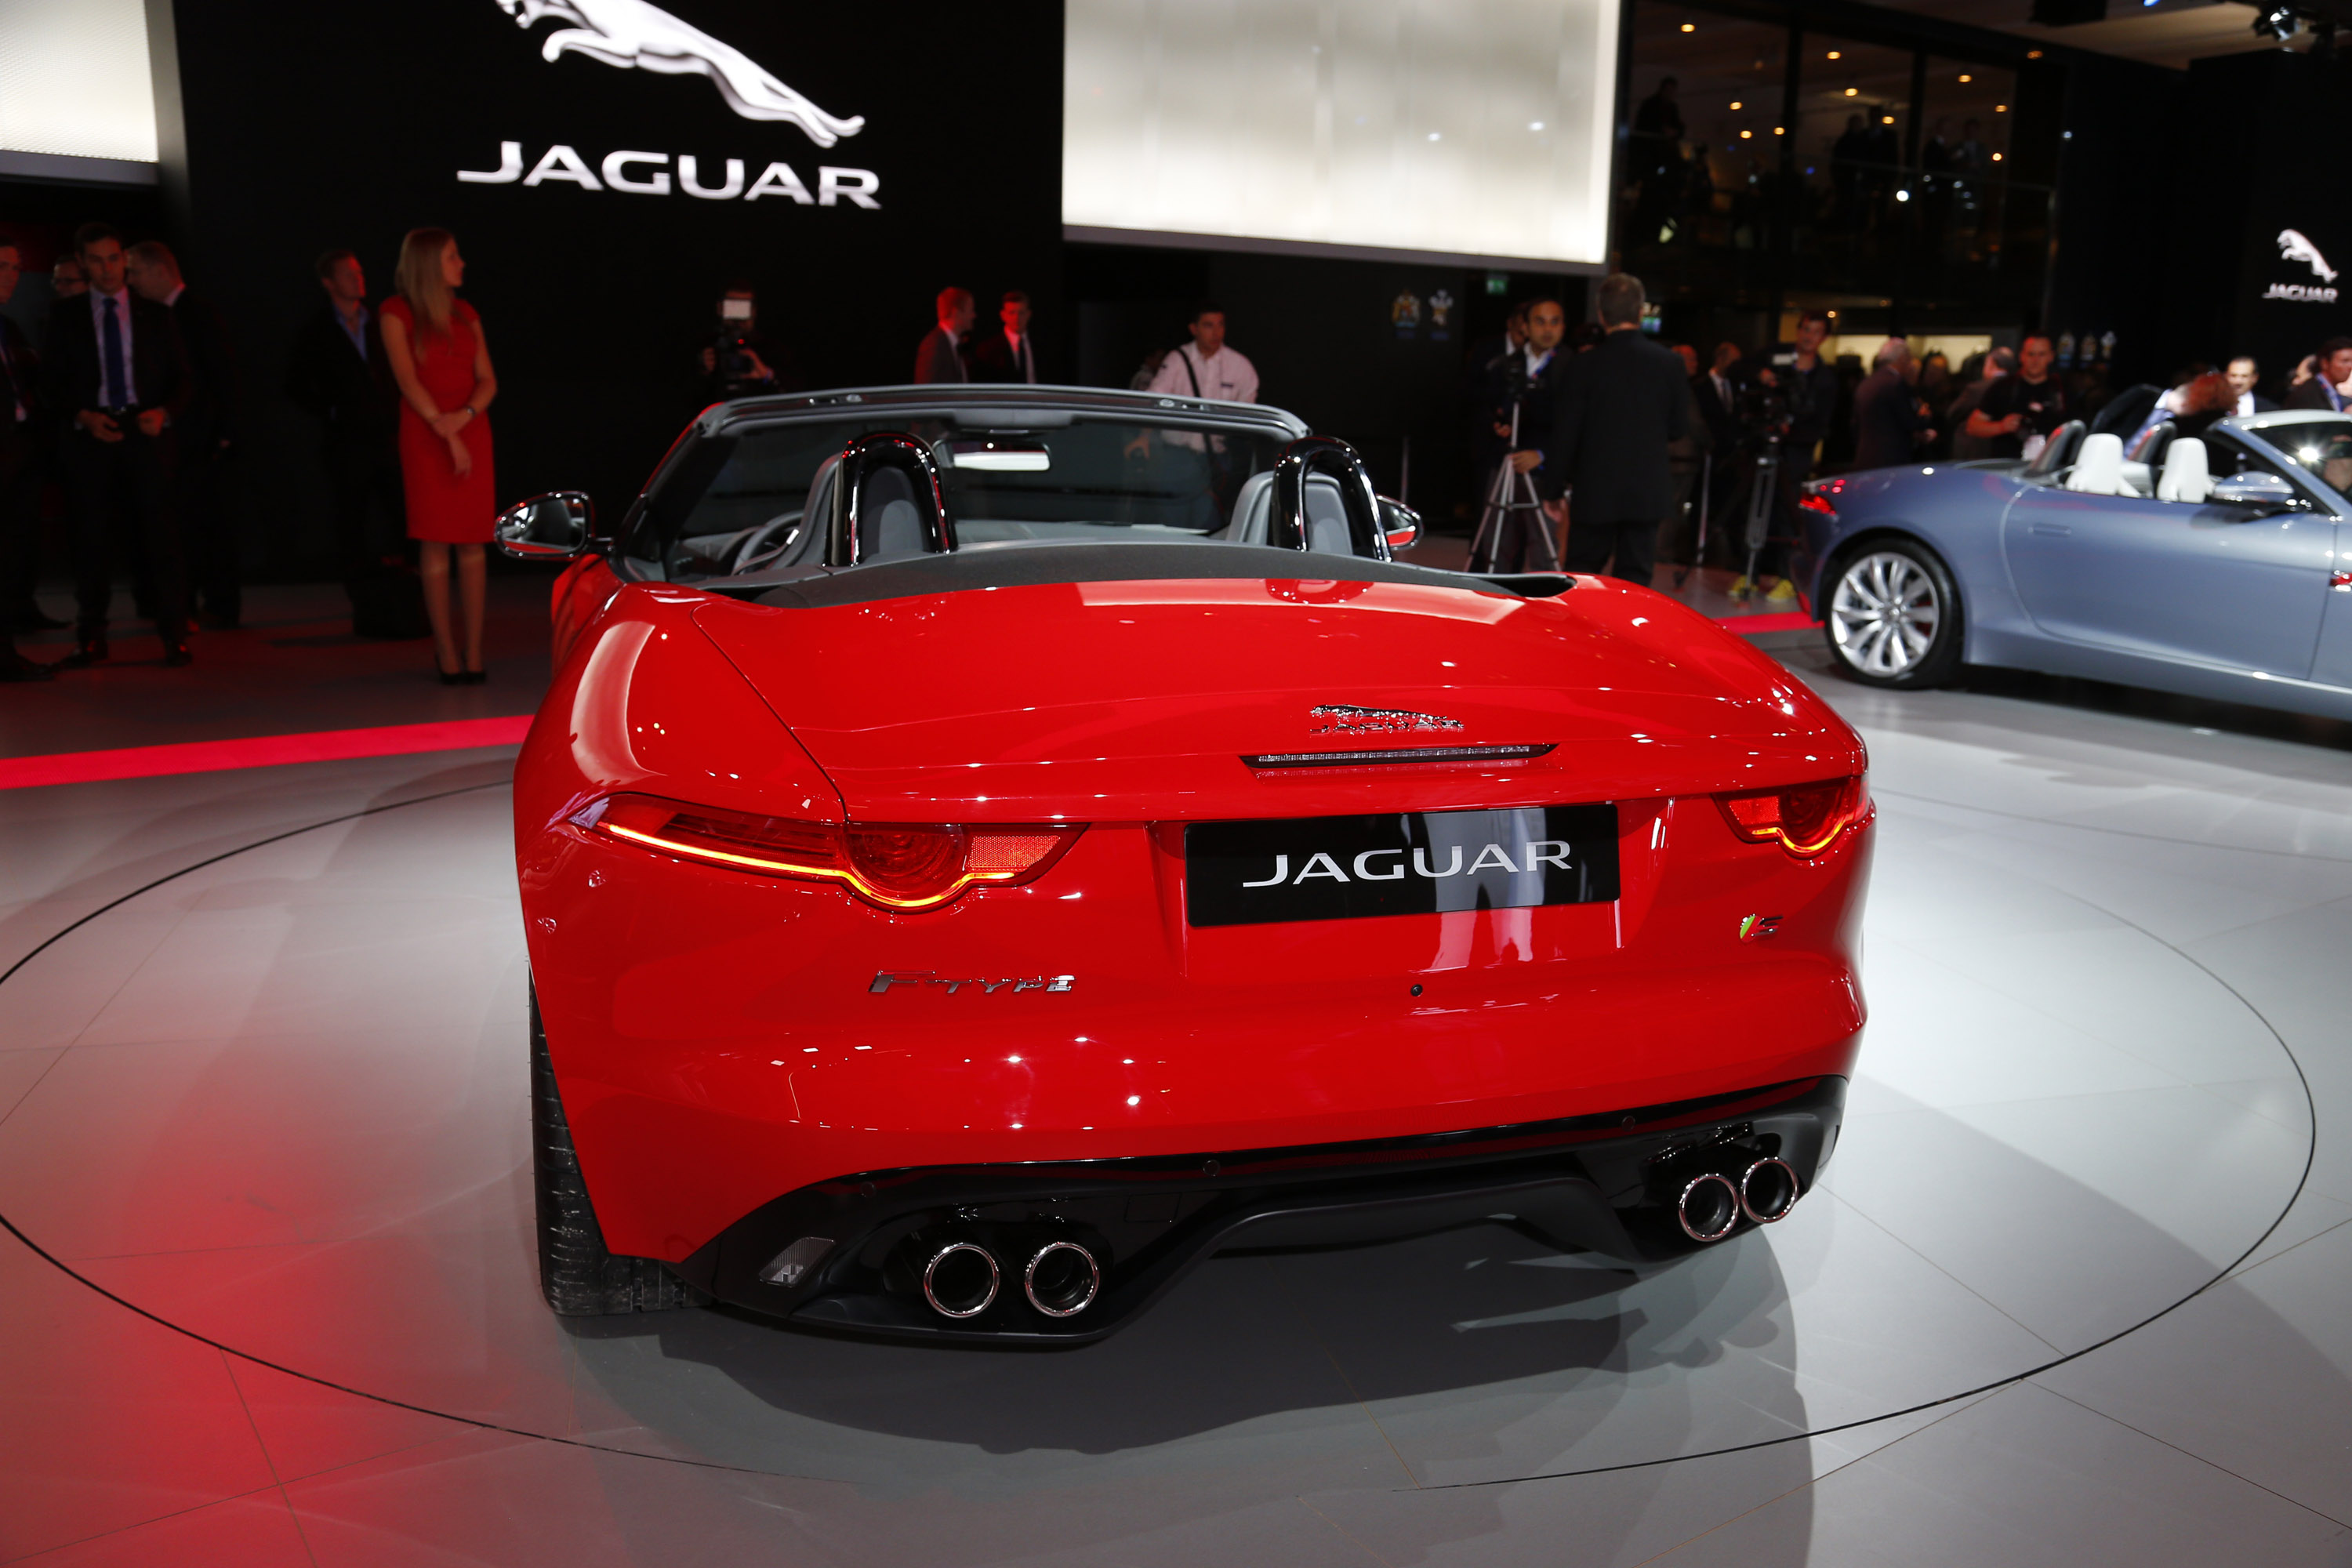 Jaguar F-TYPE Paris